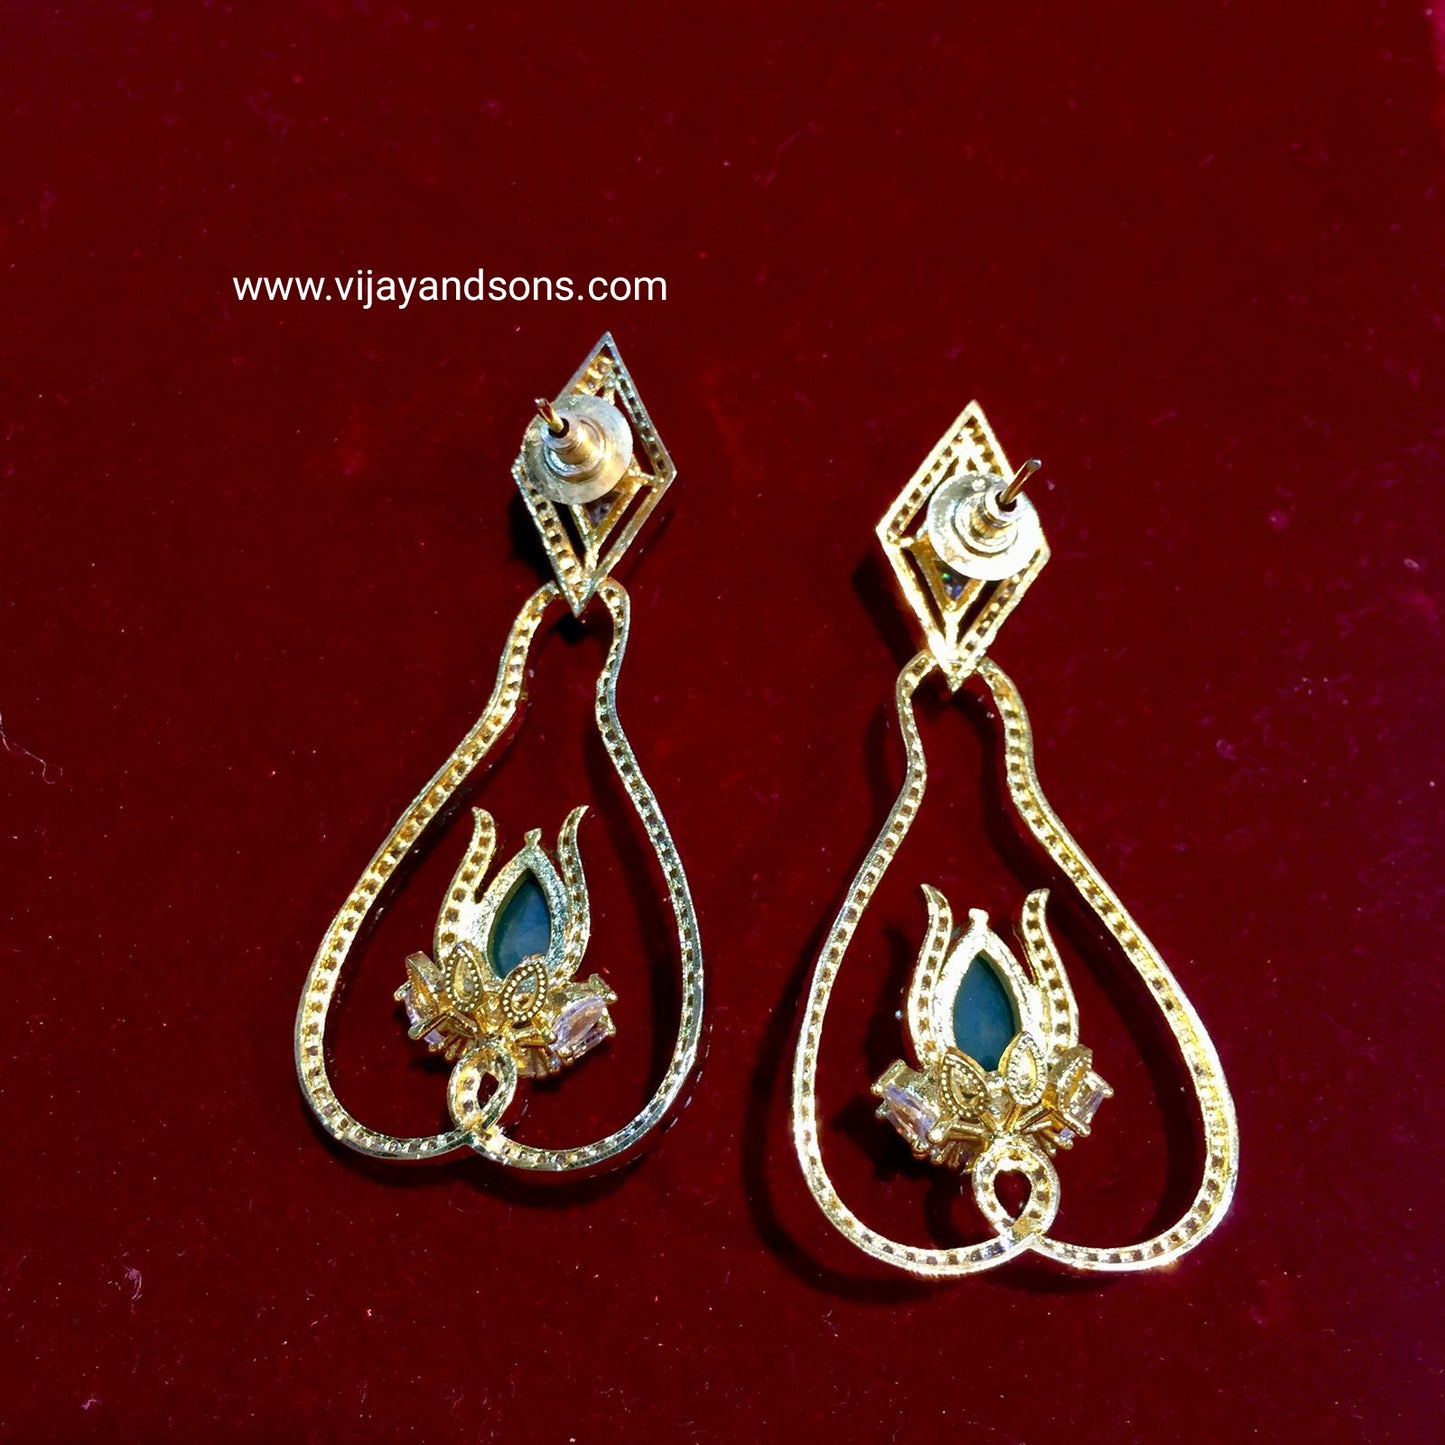 American diamond earrings 453654